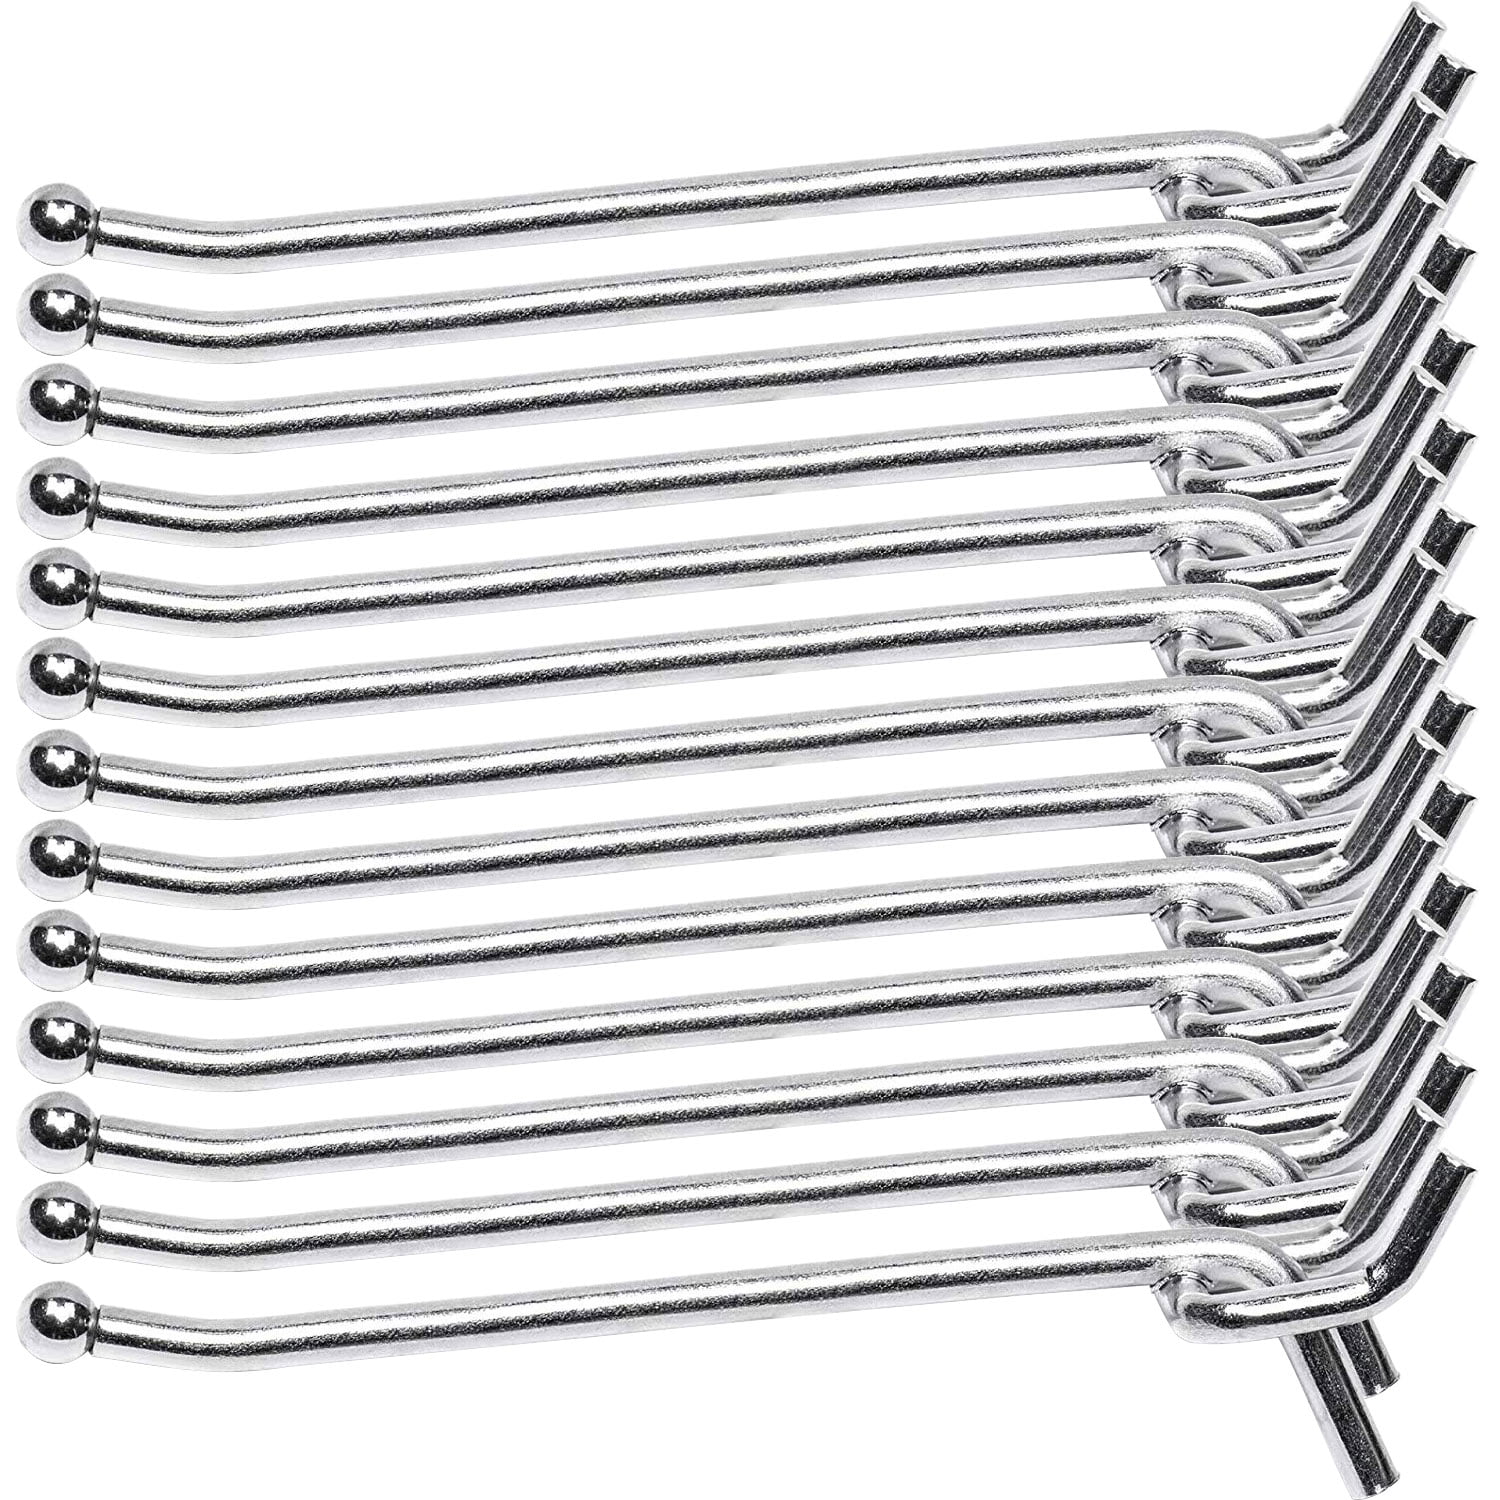 100 Each 1 & 2 All Metal Peg Hooks 1/8 to 1/4 Pegboard Slatwall Garage kit